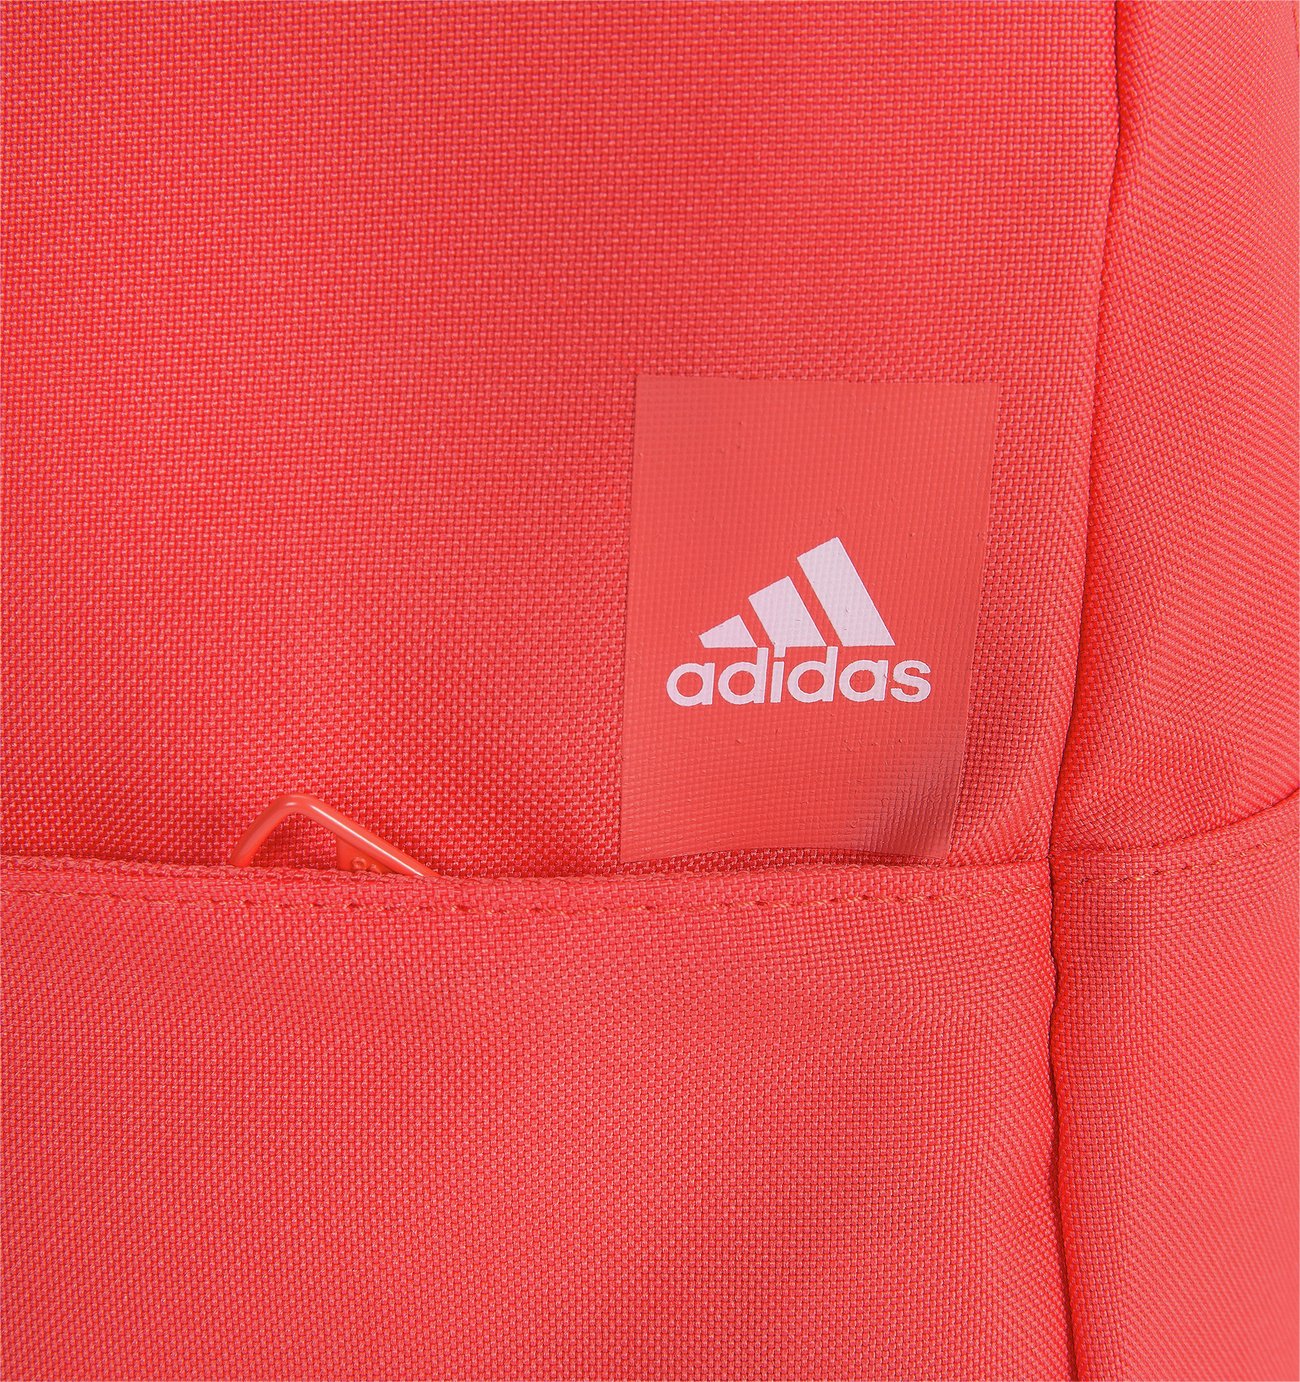 Adidas Classic Medium Backpack - Coral